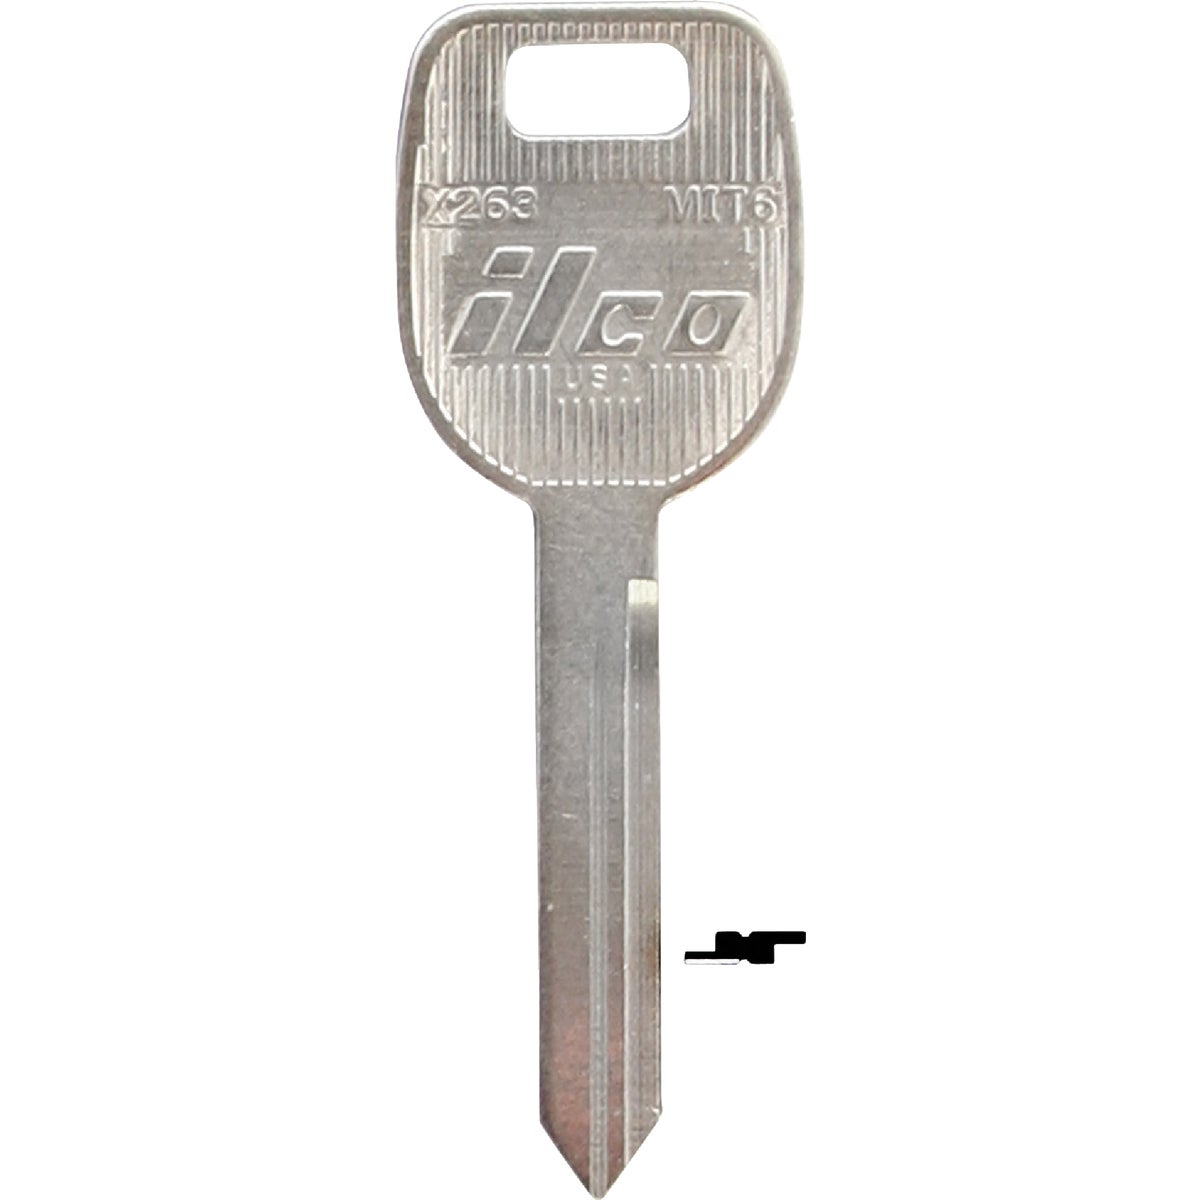 ILCO Mitsubishi Nickel Plated Automotive Key, MIT6 / X263 (10-Pack)